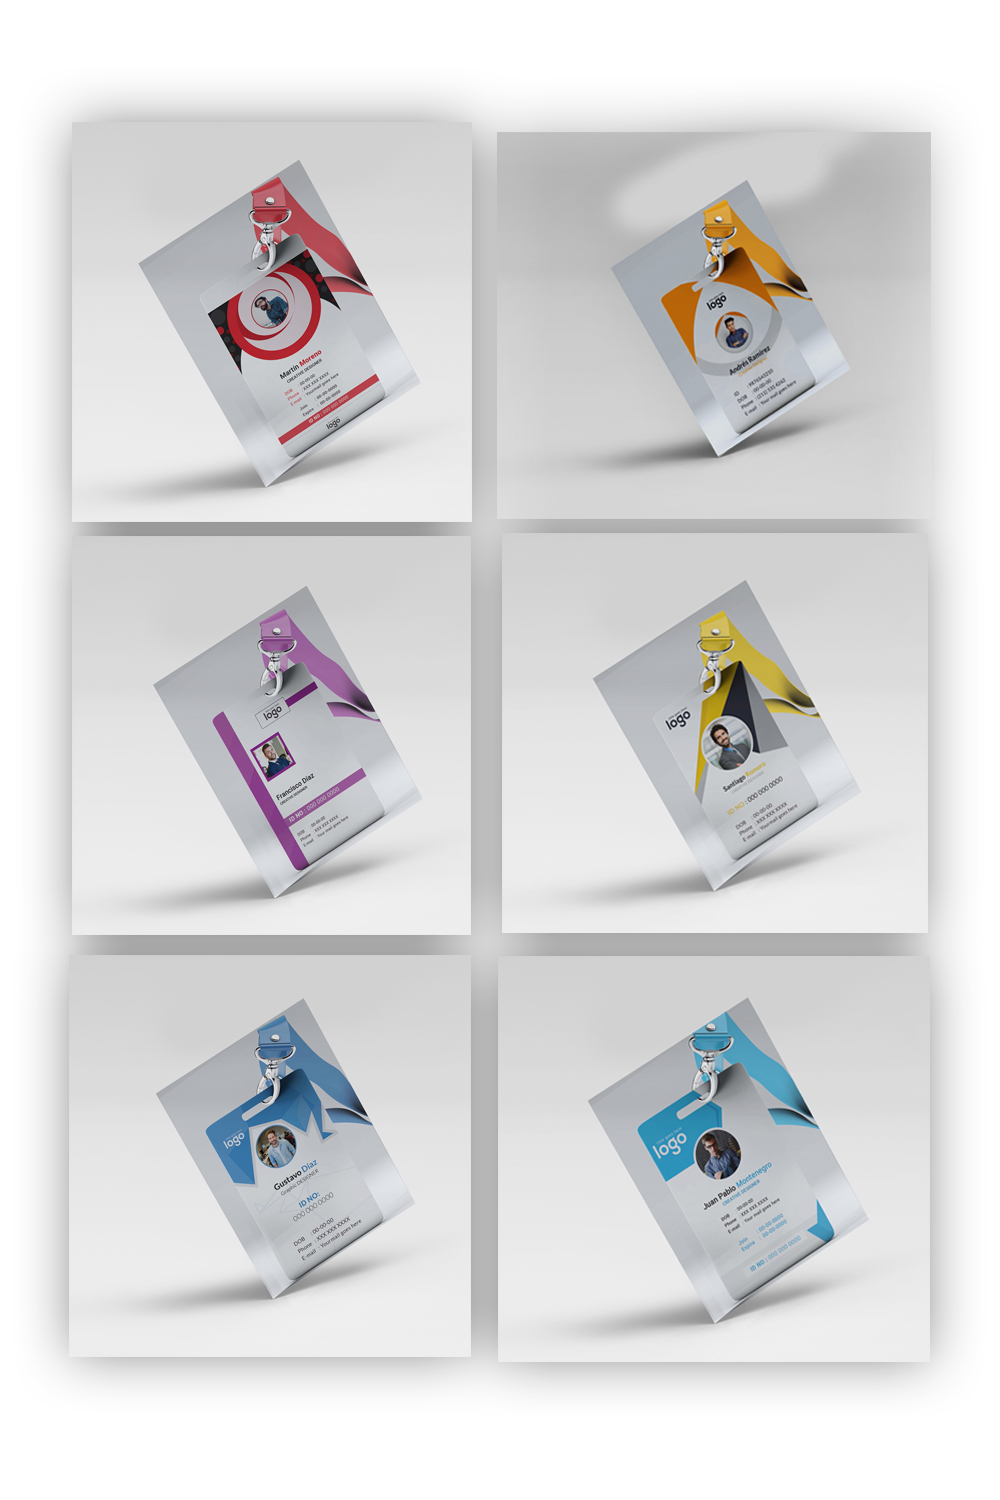 10 Print Design Multi Purpose id card Bundle pinterest preview image.